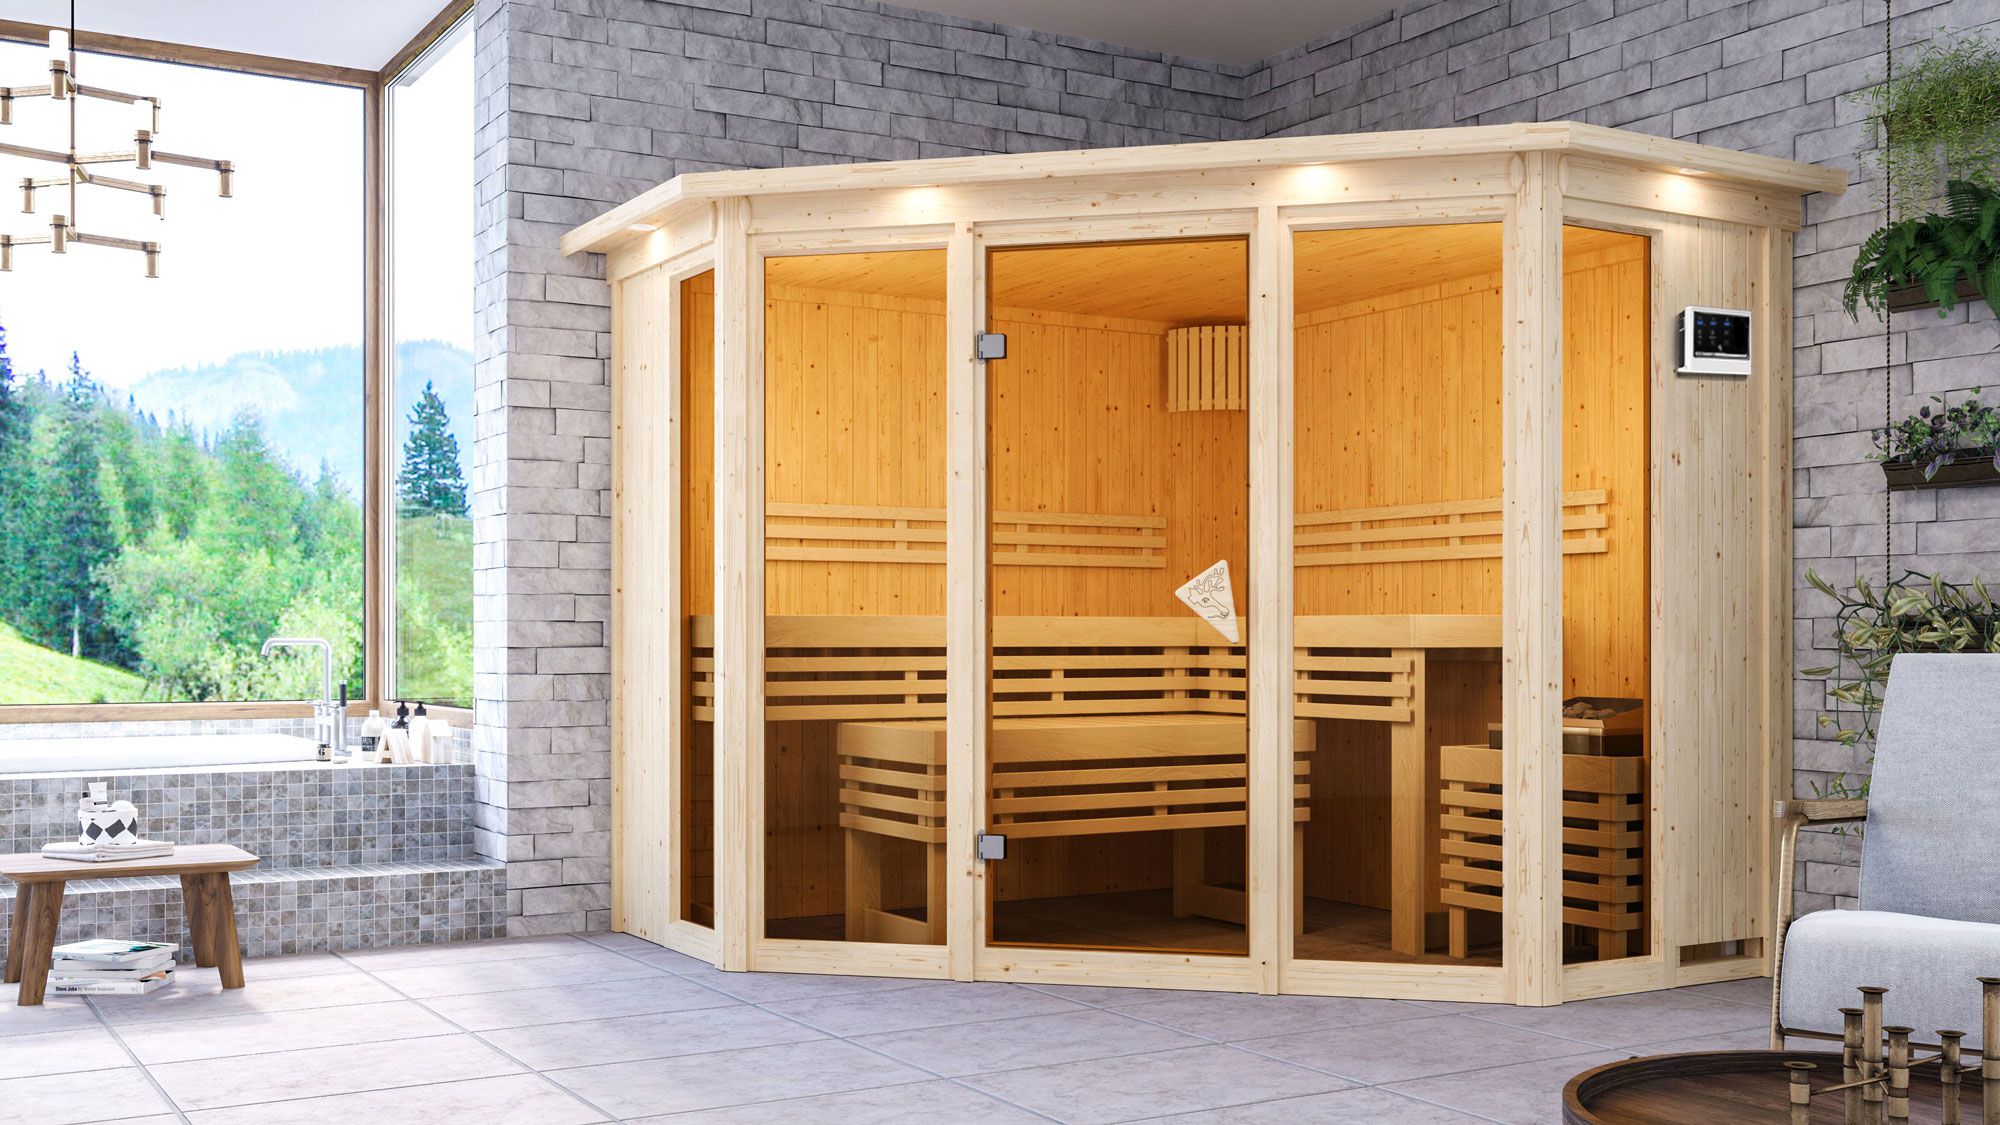 Sauna "Dilja" SET met bronskleurige deur en rand - kleur: naturel, kachel externe regeling eenvoudig 9 kW - 245 x 245 x 202 cm (B x D x H)